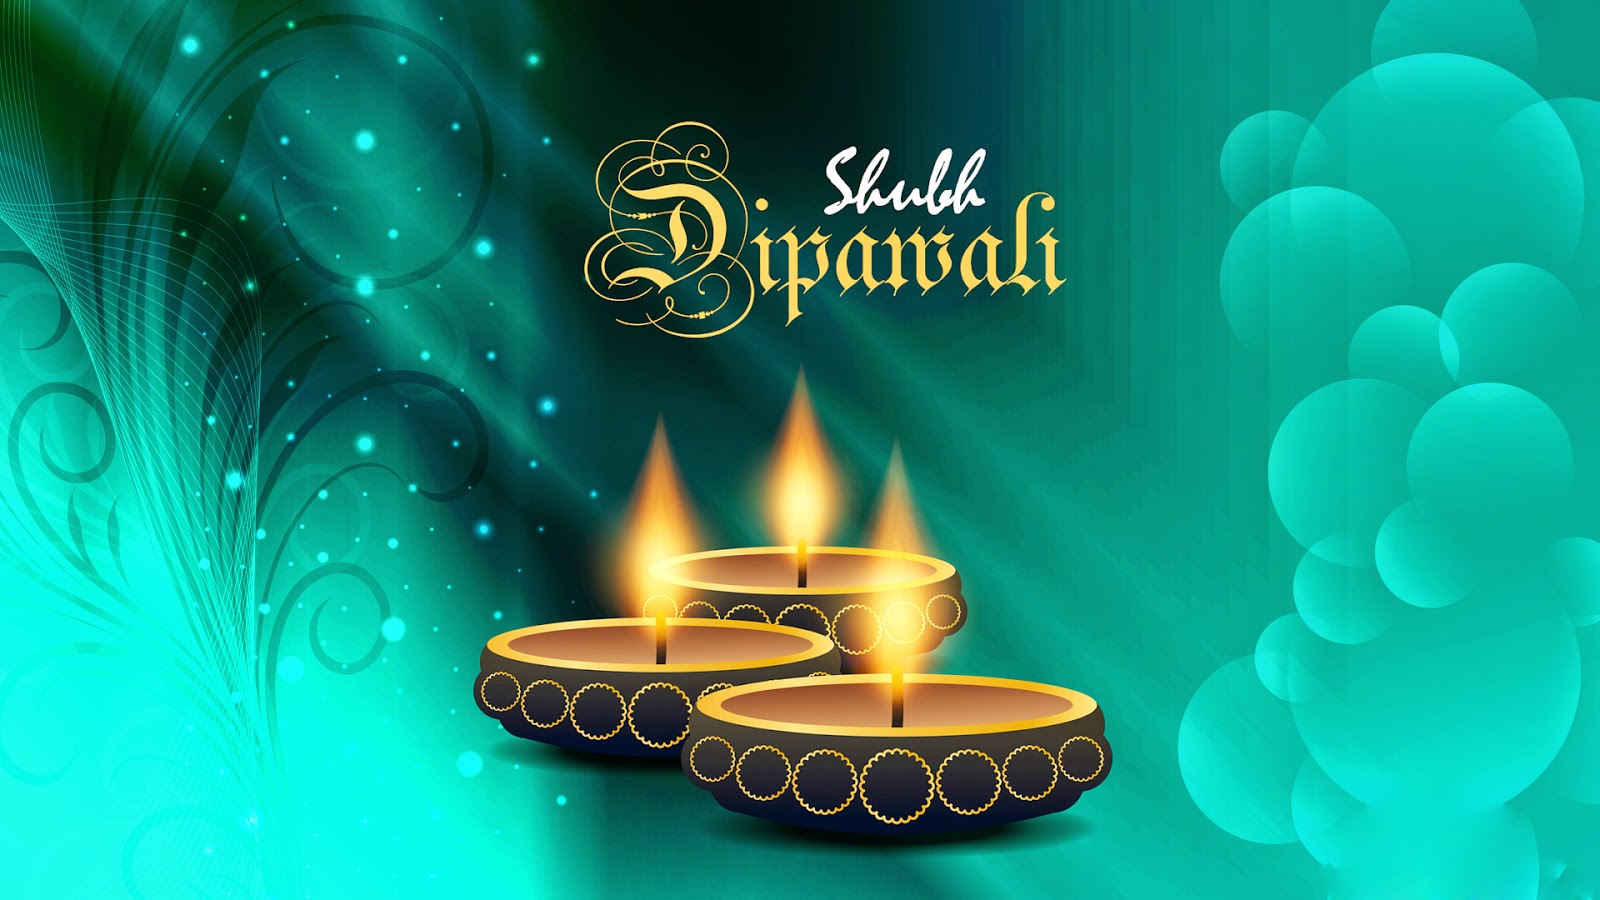 Free download Diwali Wallpaper 2019 Download Free Latest HD Diwali ...